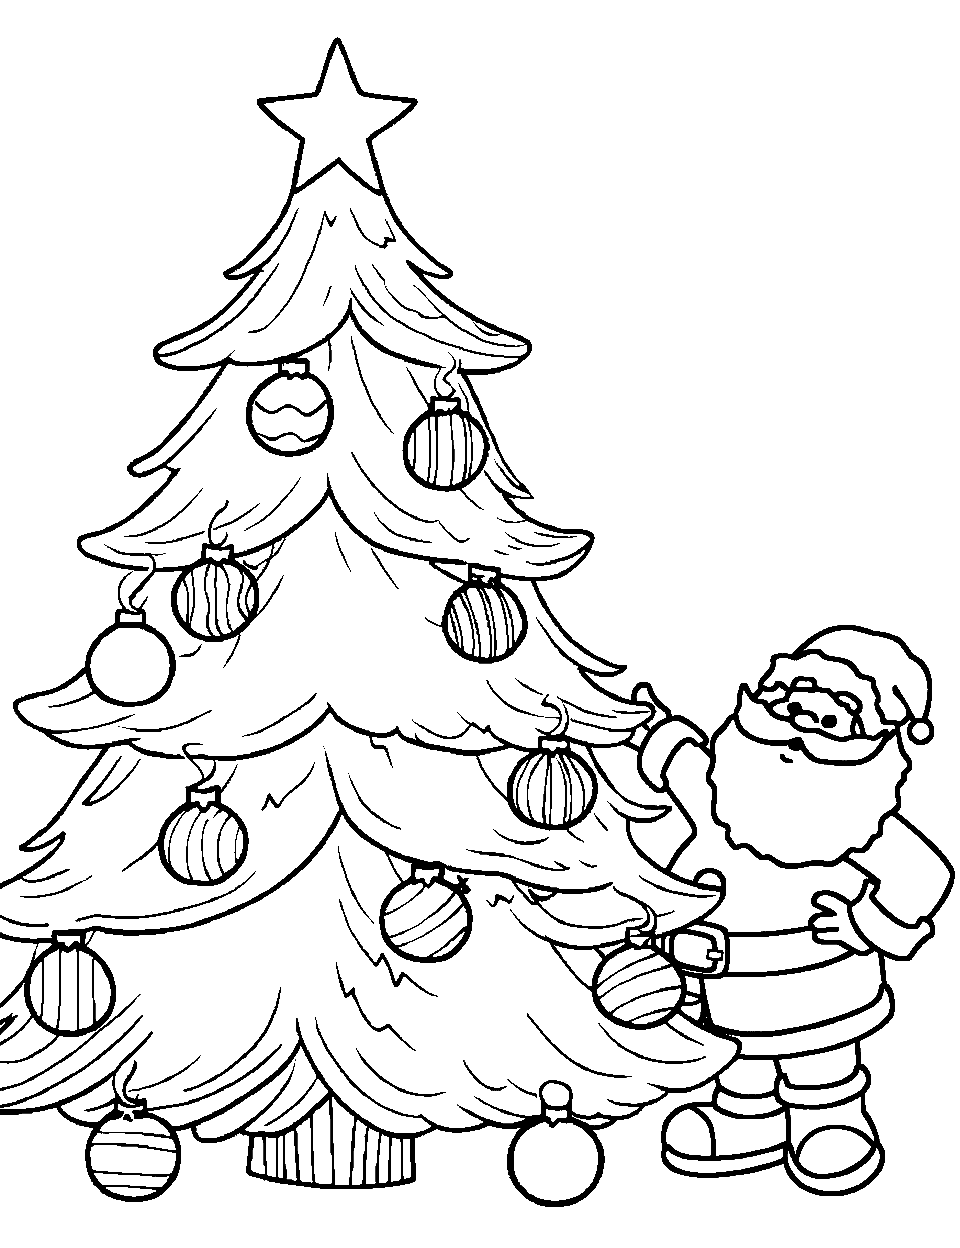 Christmas Tree Decorating Santa Coloring Page - Santa decorating a tall Christmas tree with a star at the very top.